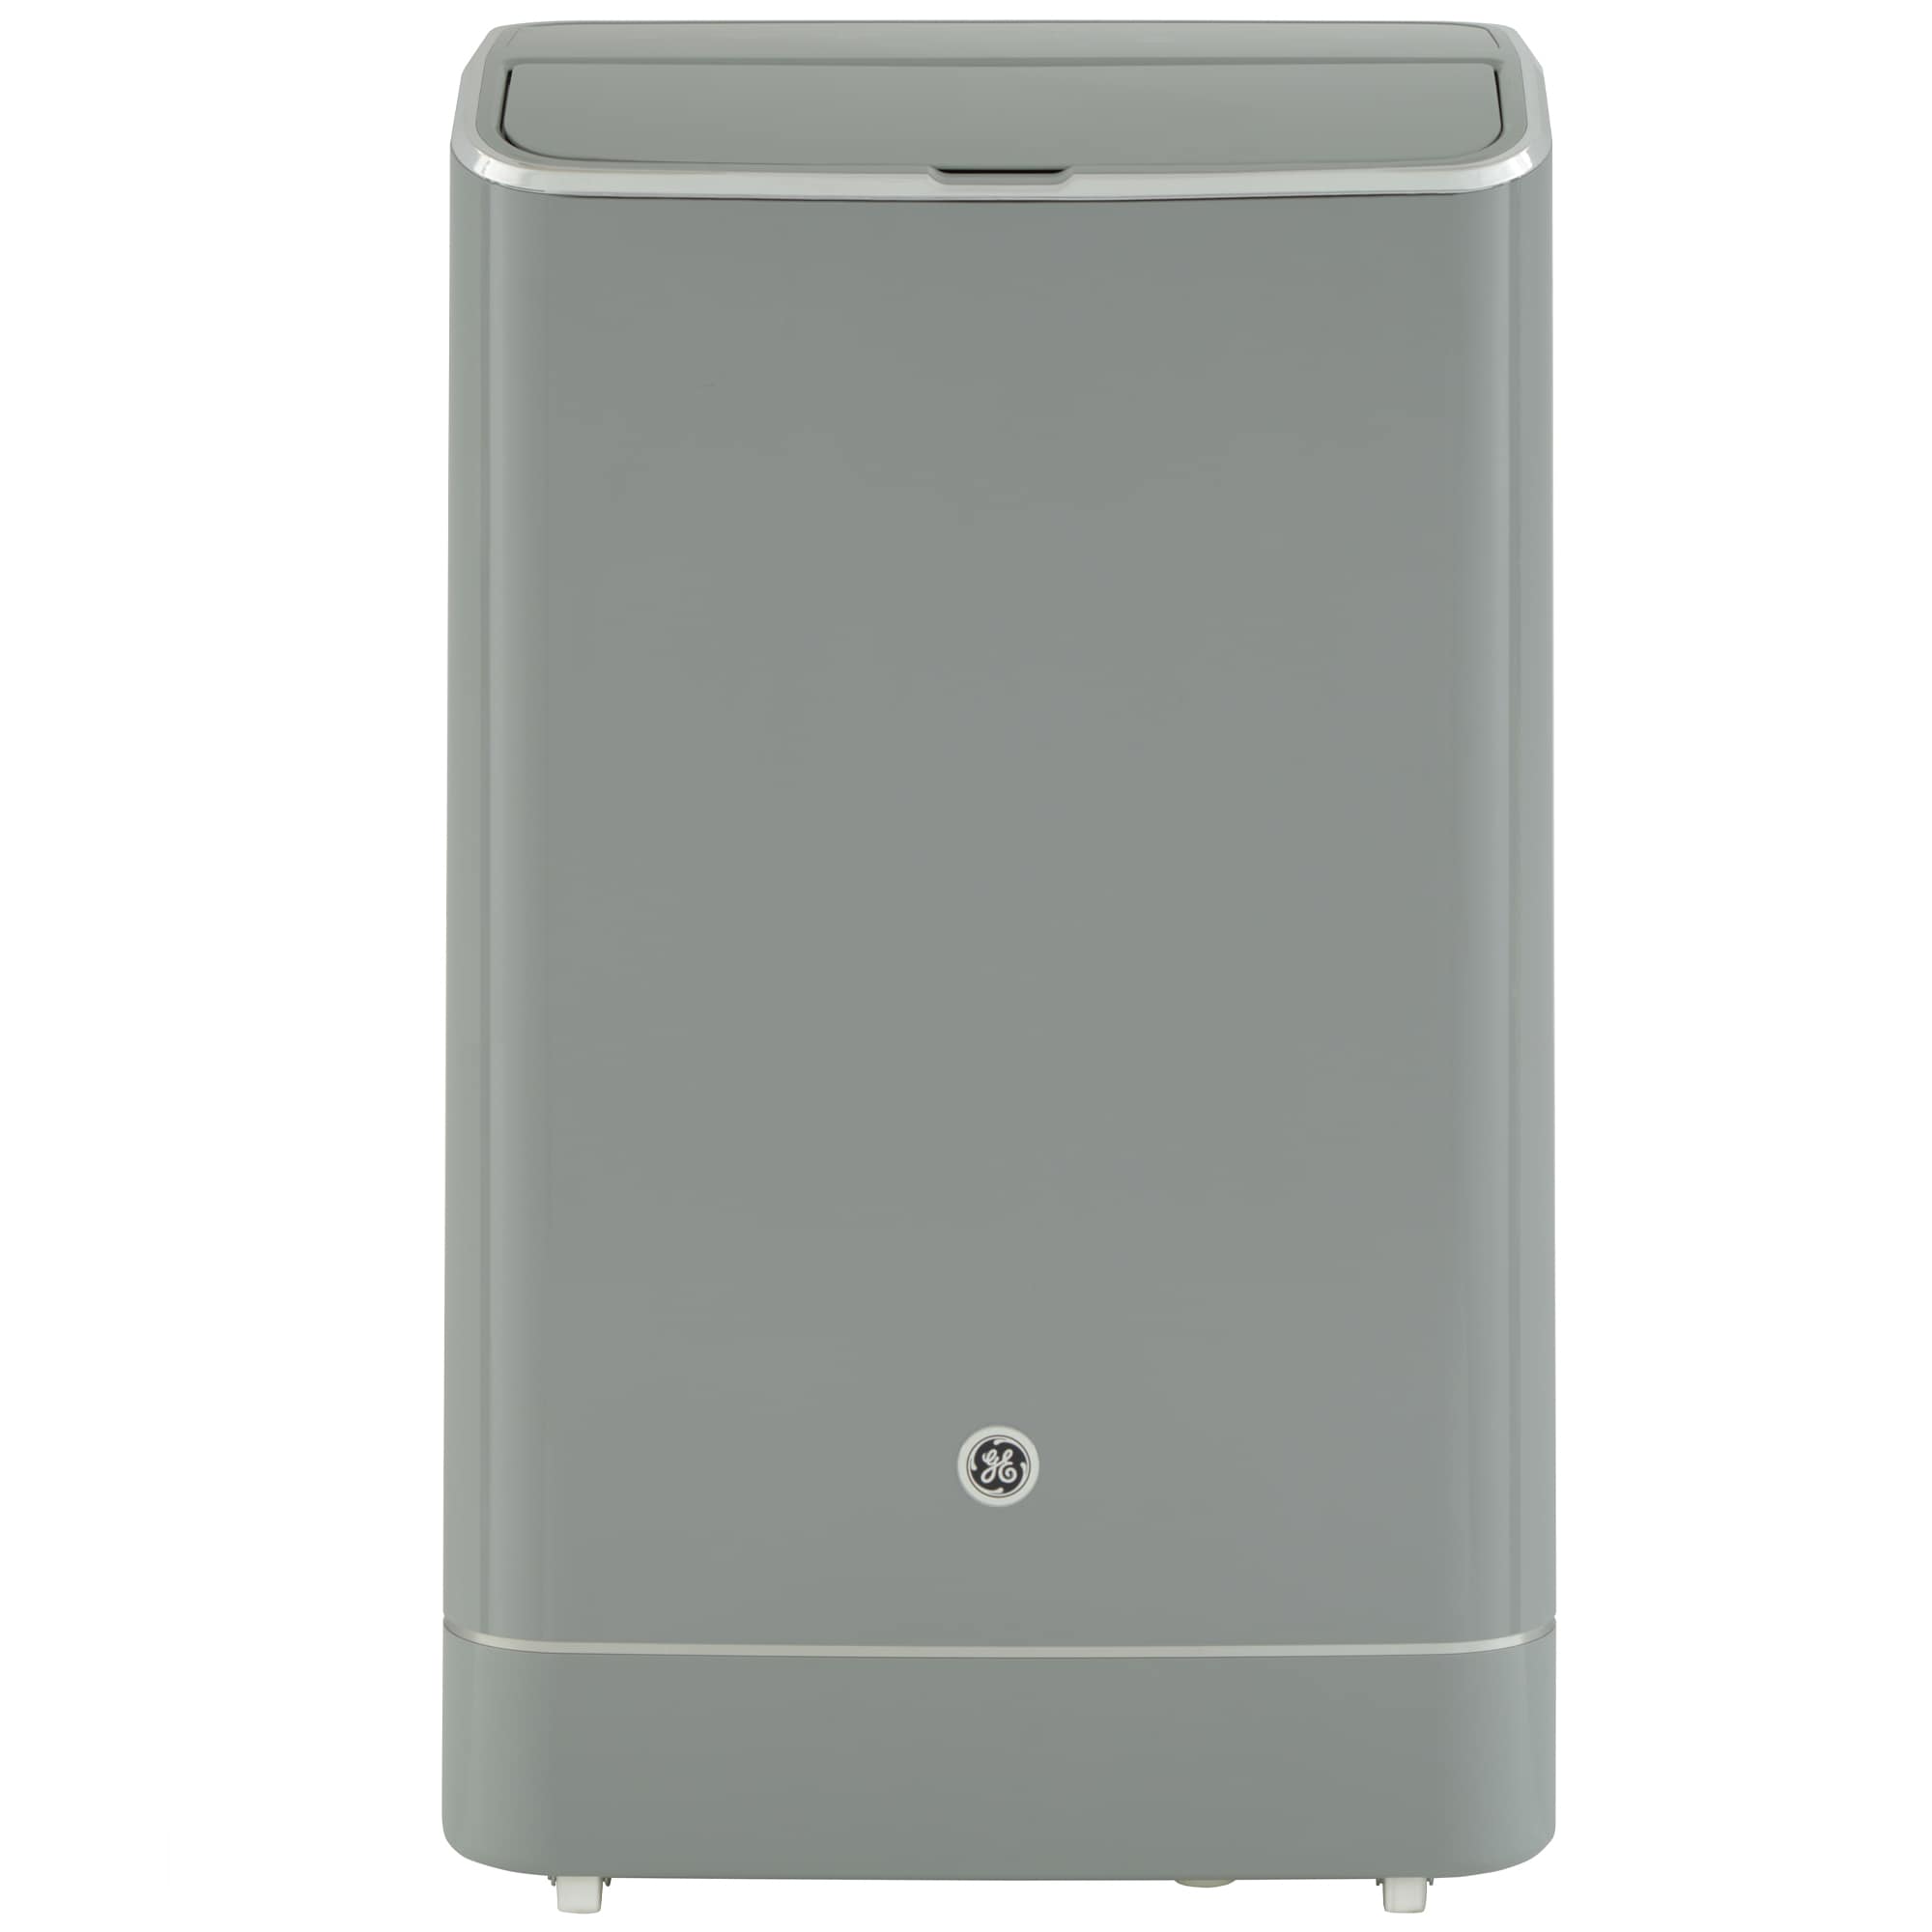  BLACK+DECKER BPACT12WT Portable Air Conditioner, 12,000 BTU,  White & Black + Decker BPACT10WT Portable Air Conditioner, 10,000 BTU :  Home & Kitchen